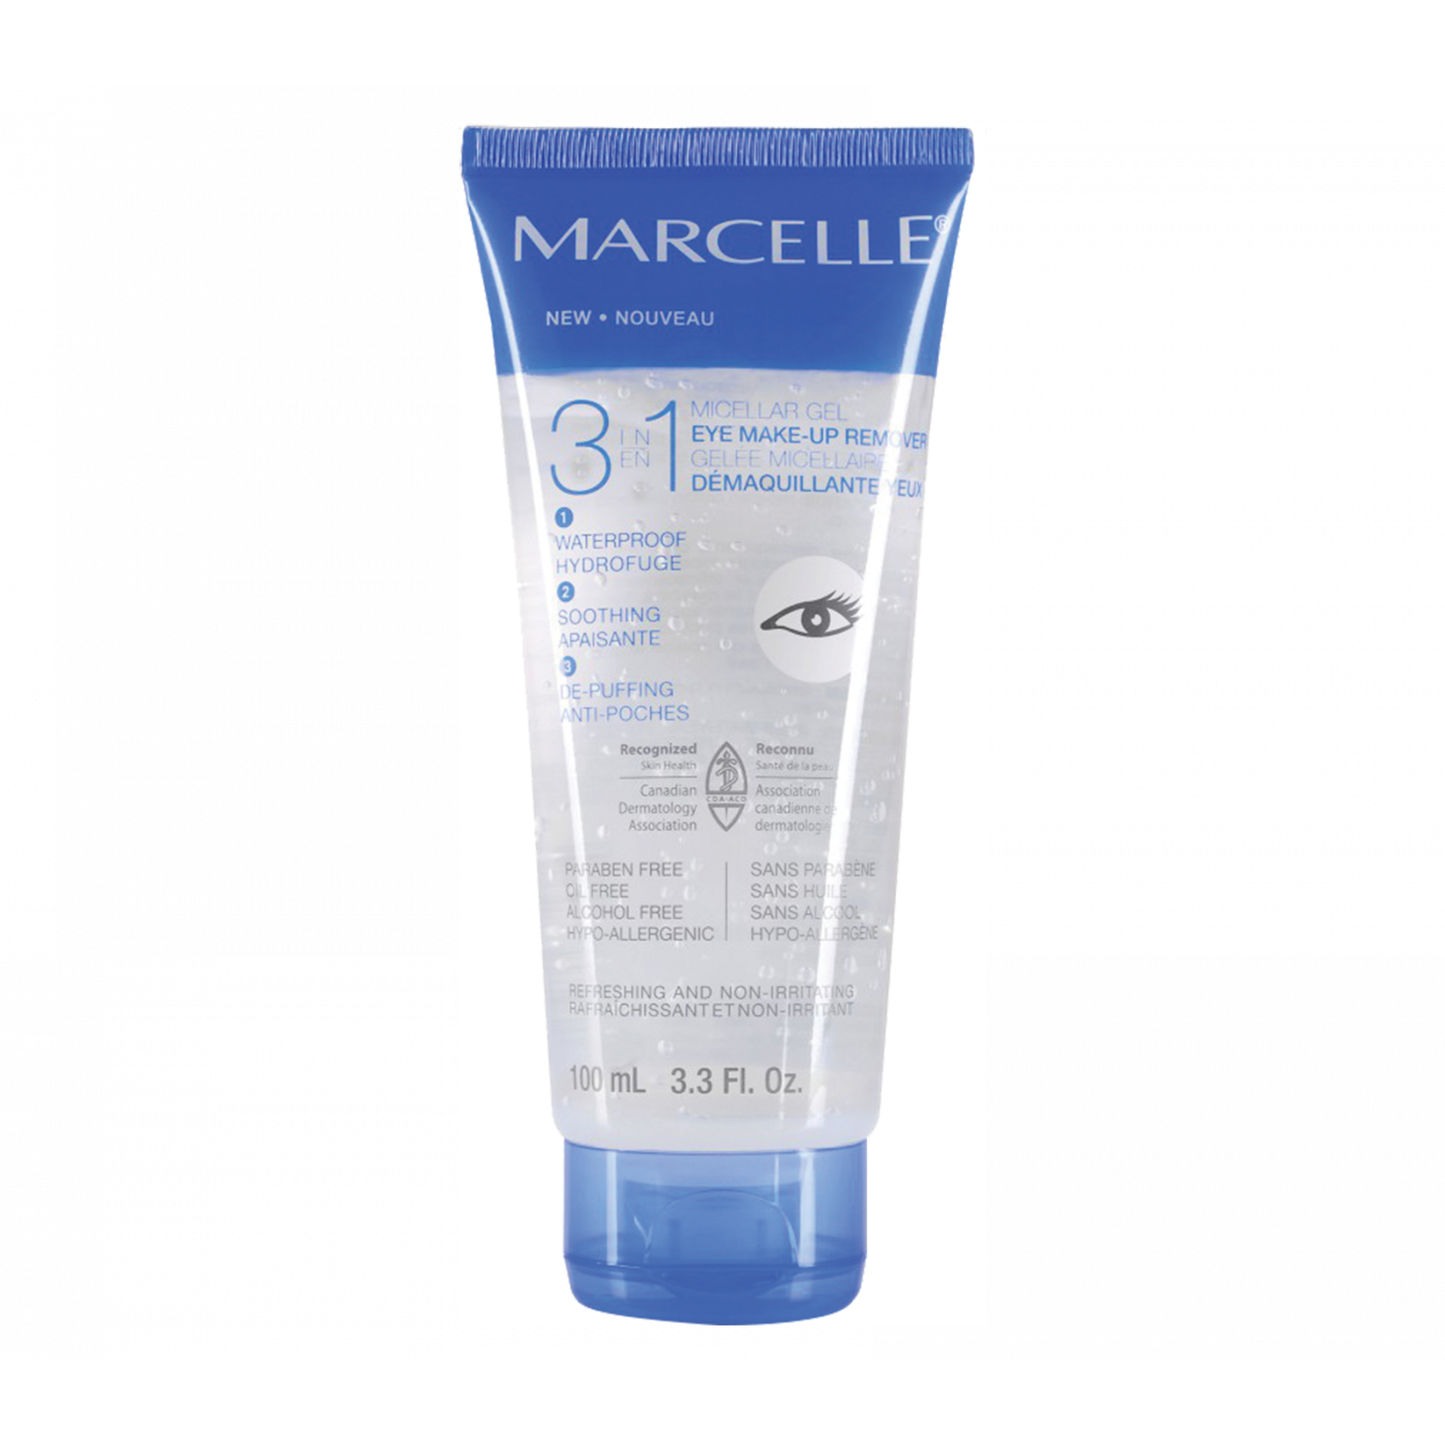 Marcelle 3-in1 Micellar Eye Makeup Remover Gel